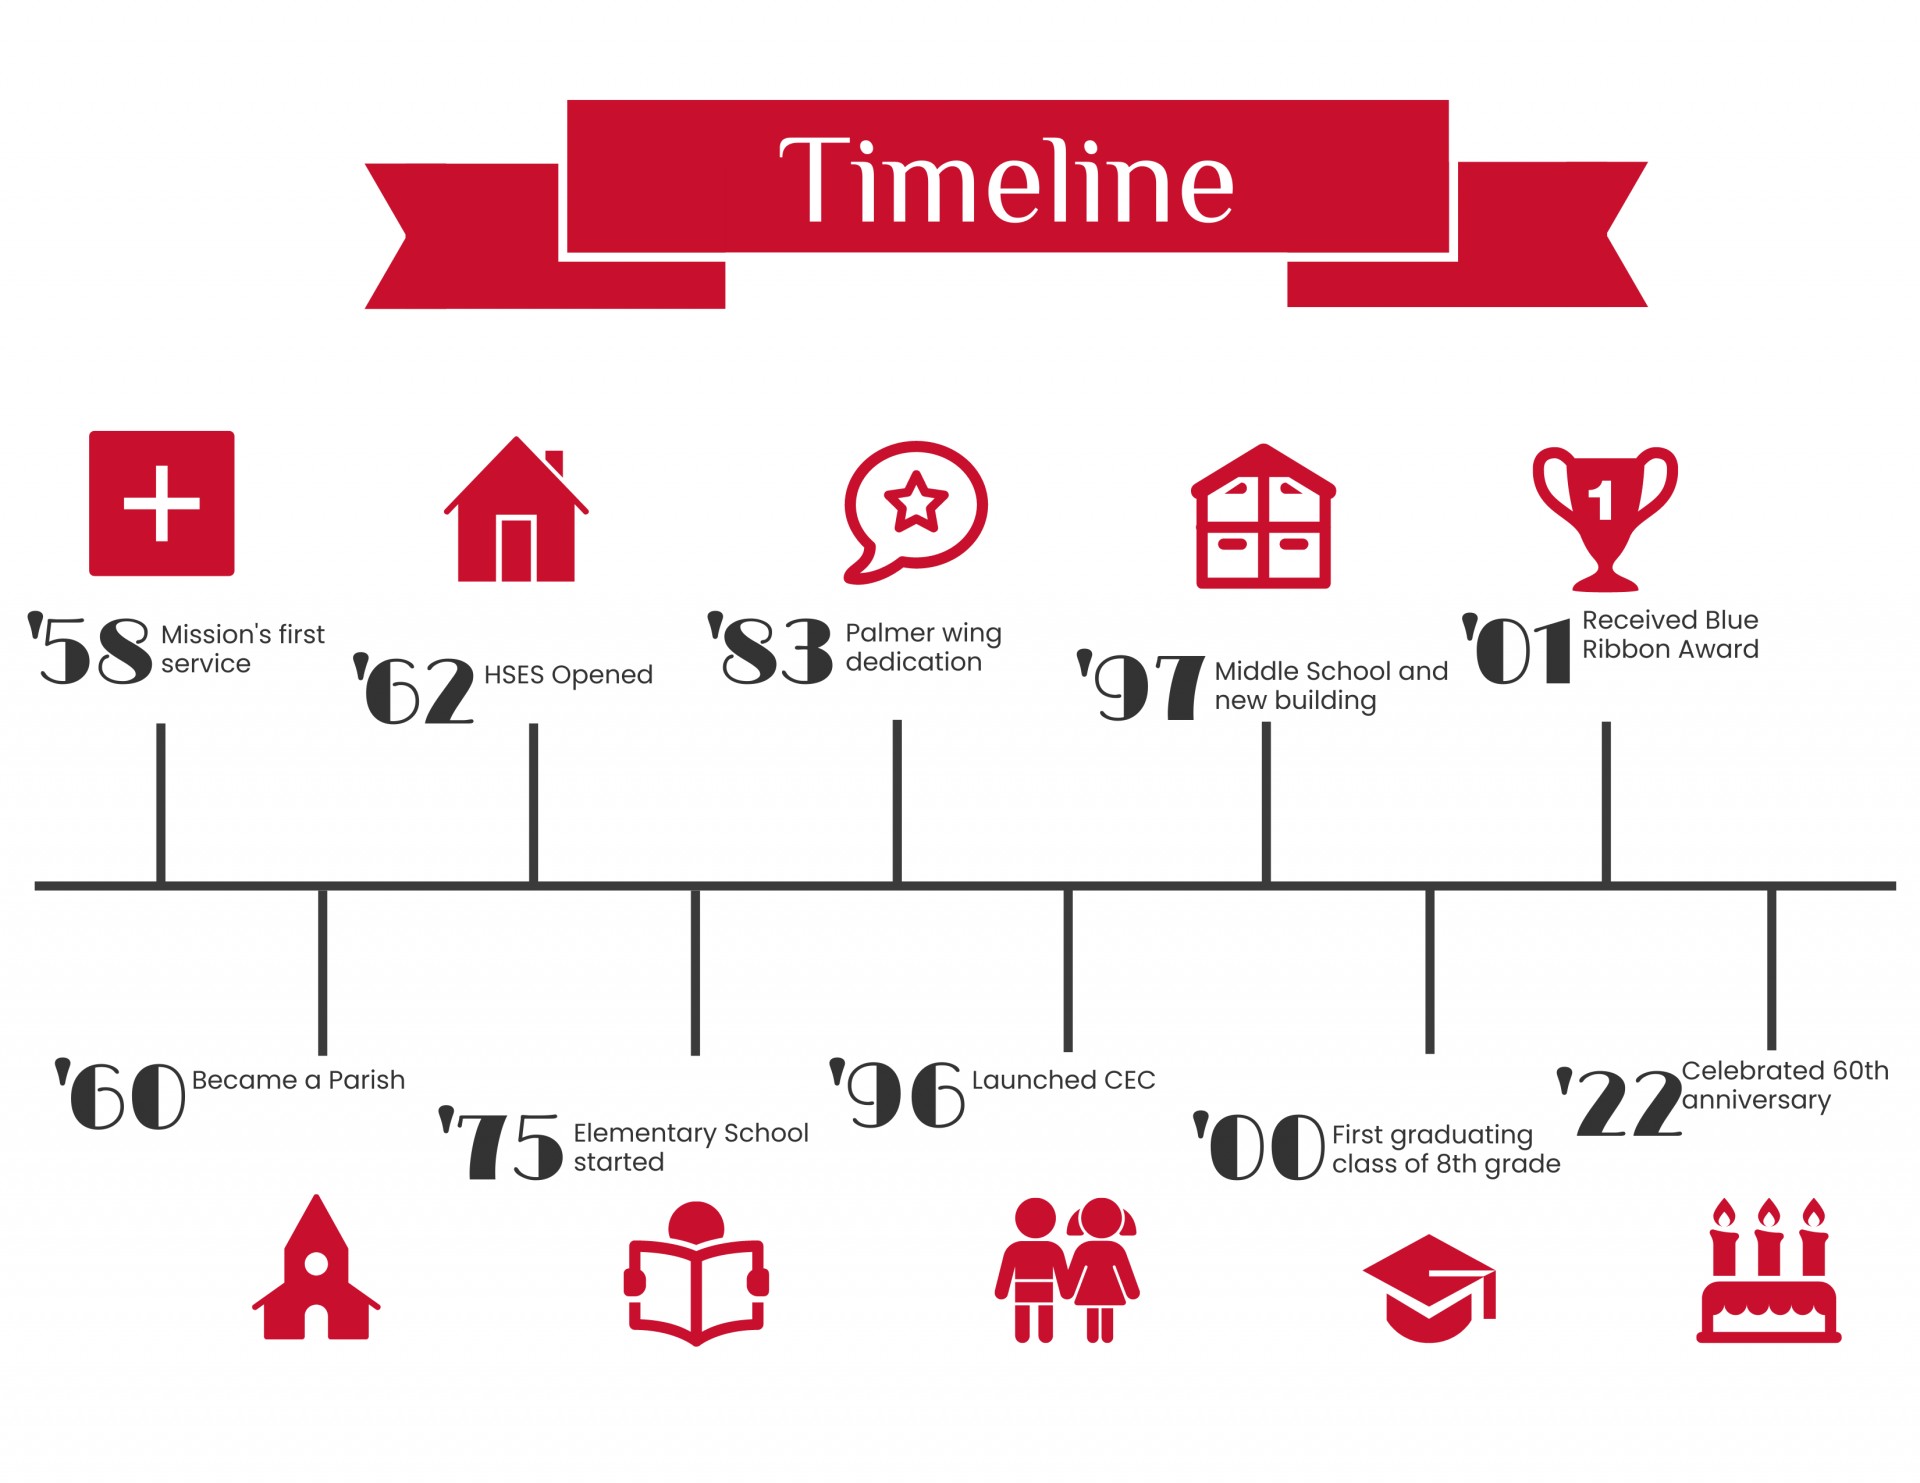 Timeline of Holy Spirit Episcopal School's history